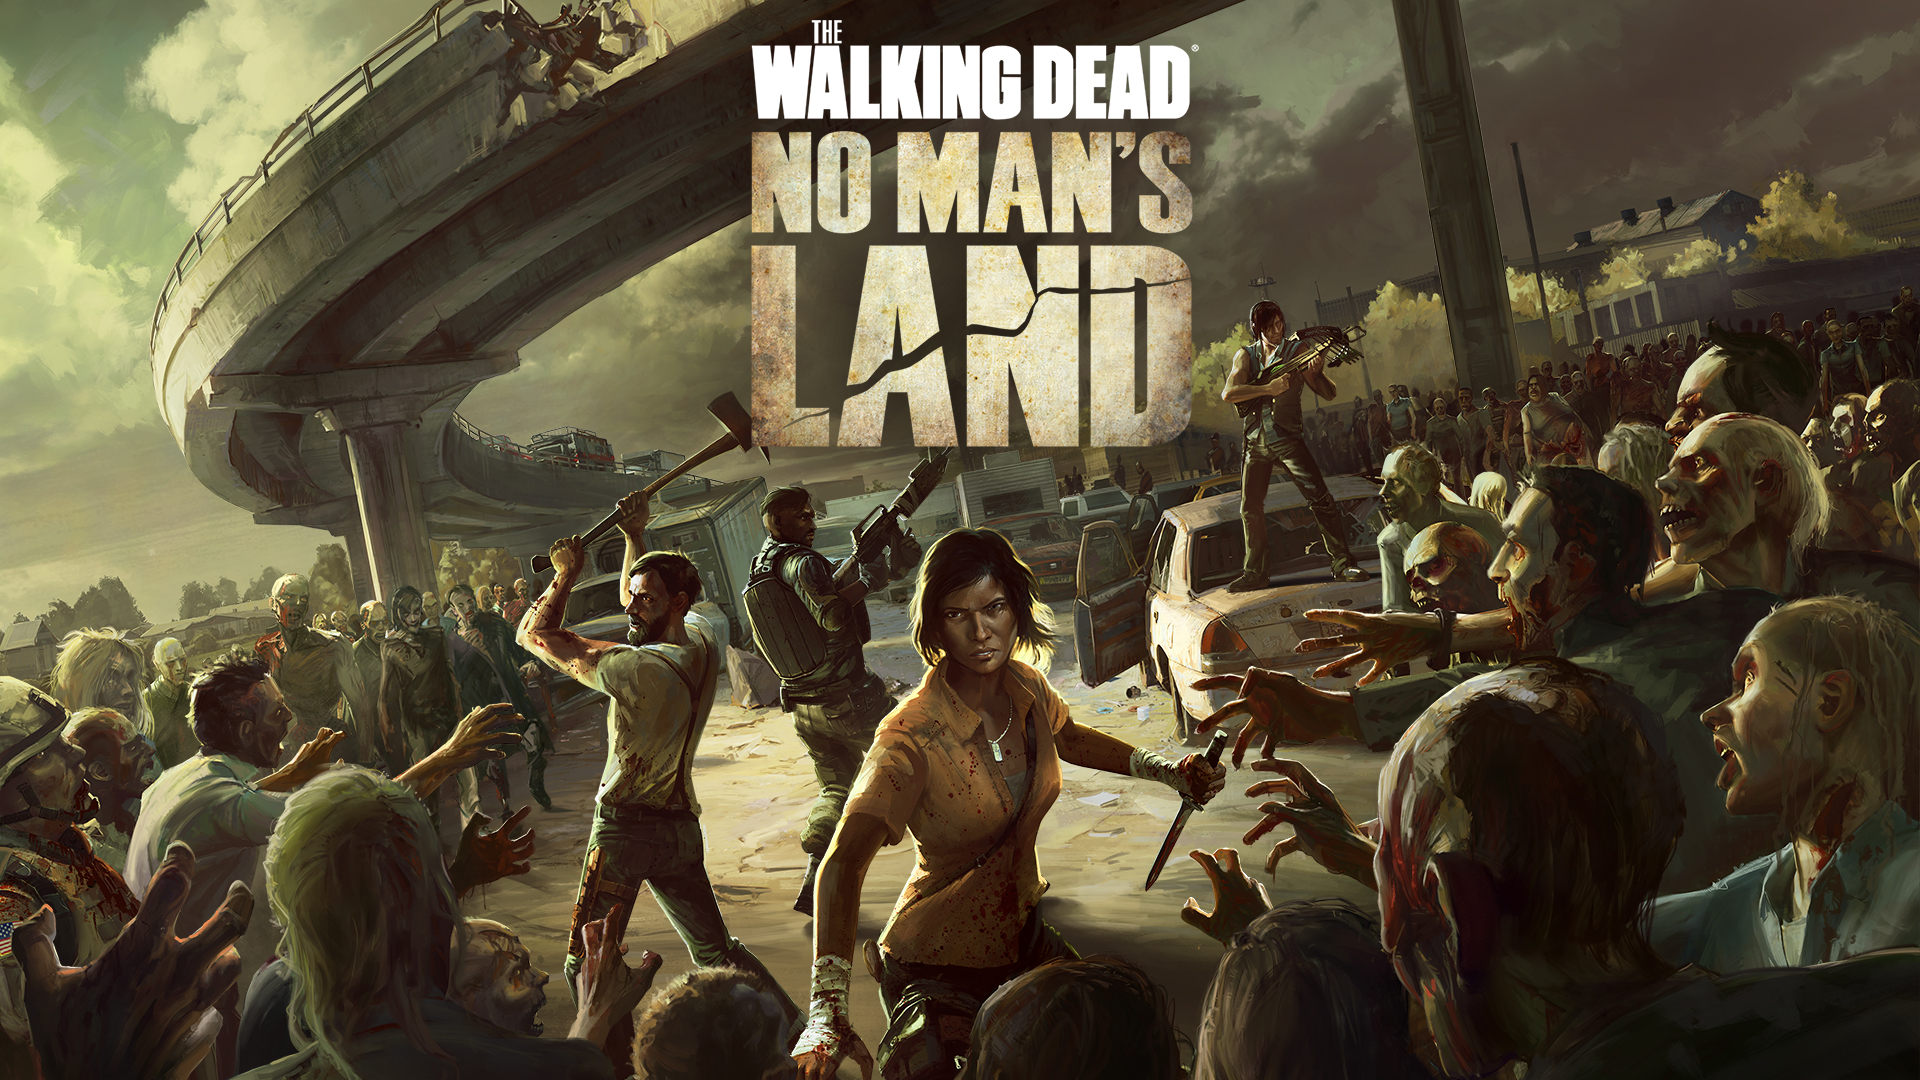 The Walking Dead: No Man’s Land